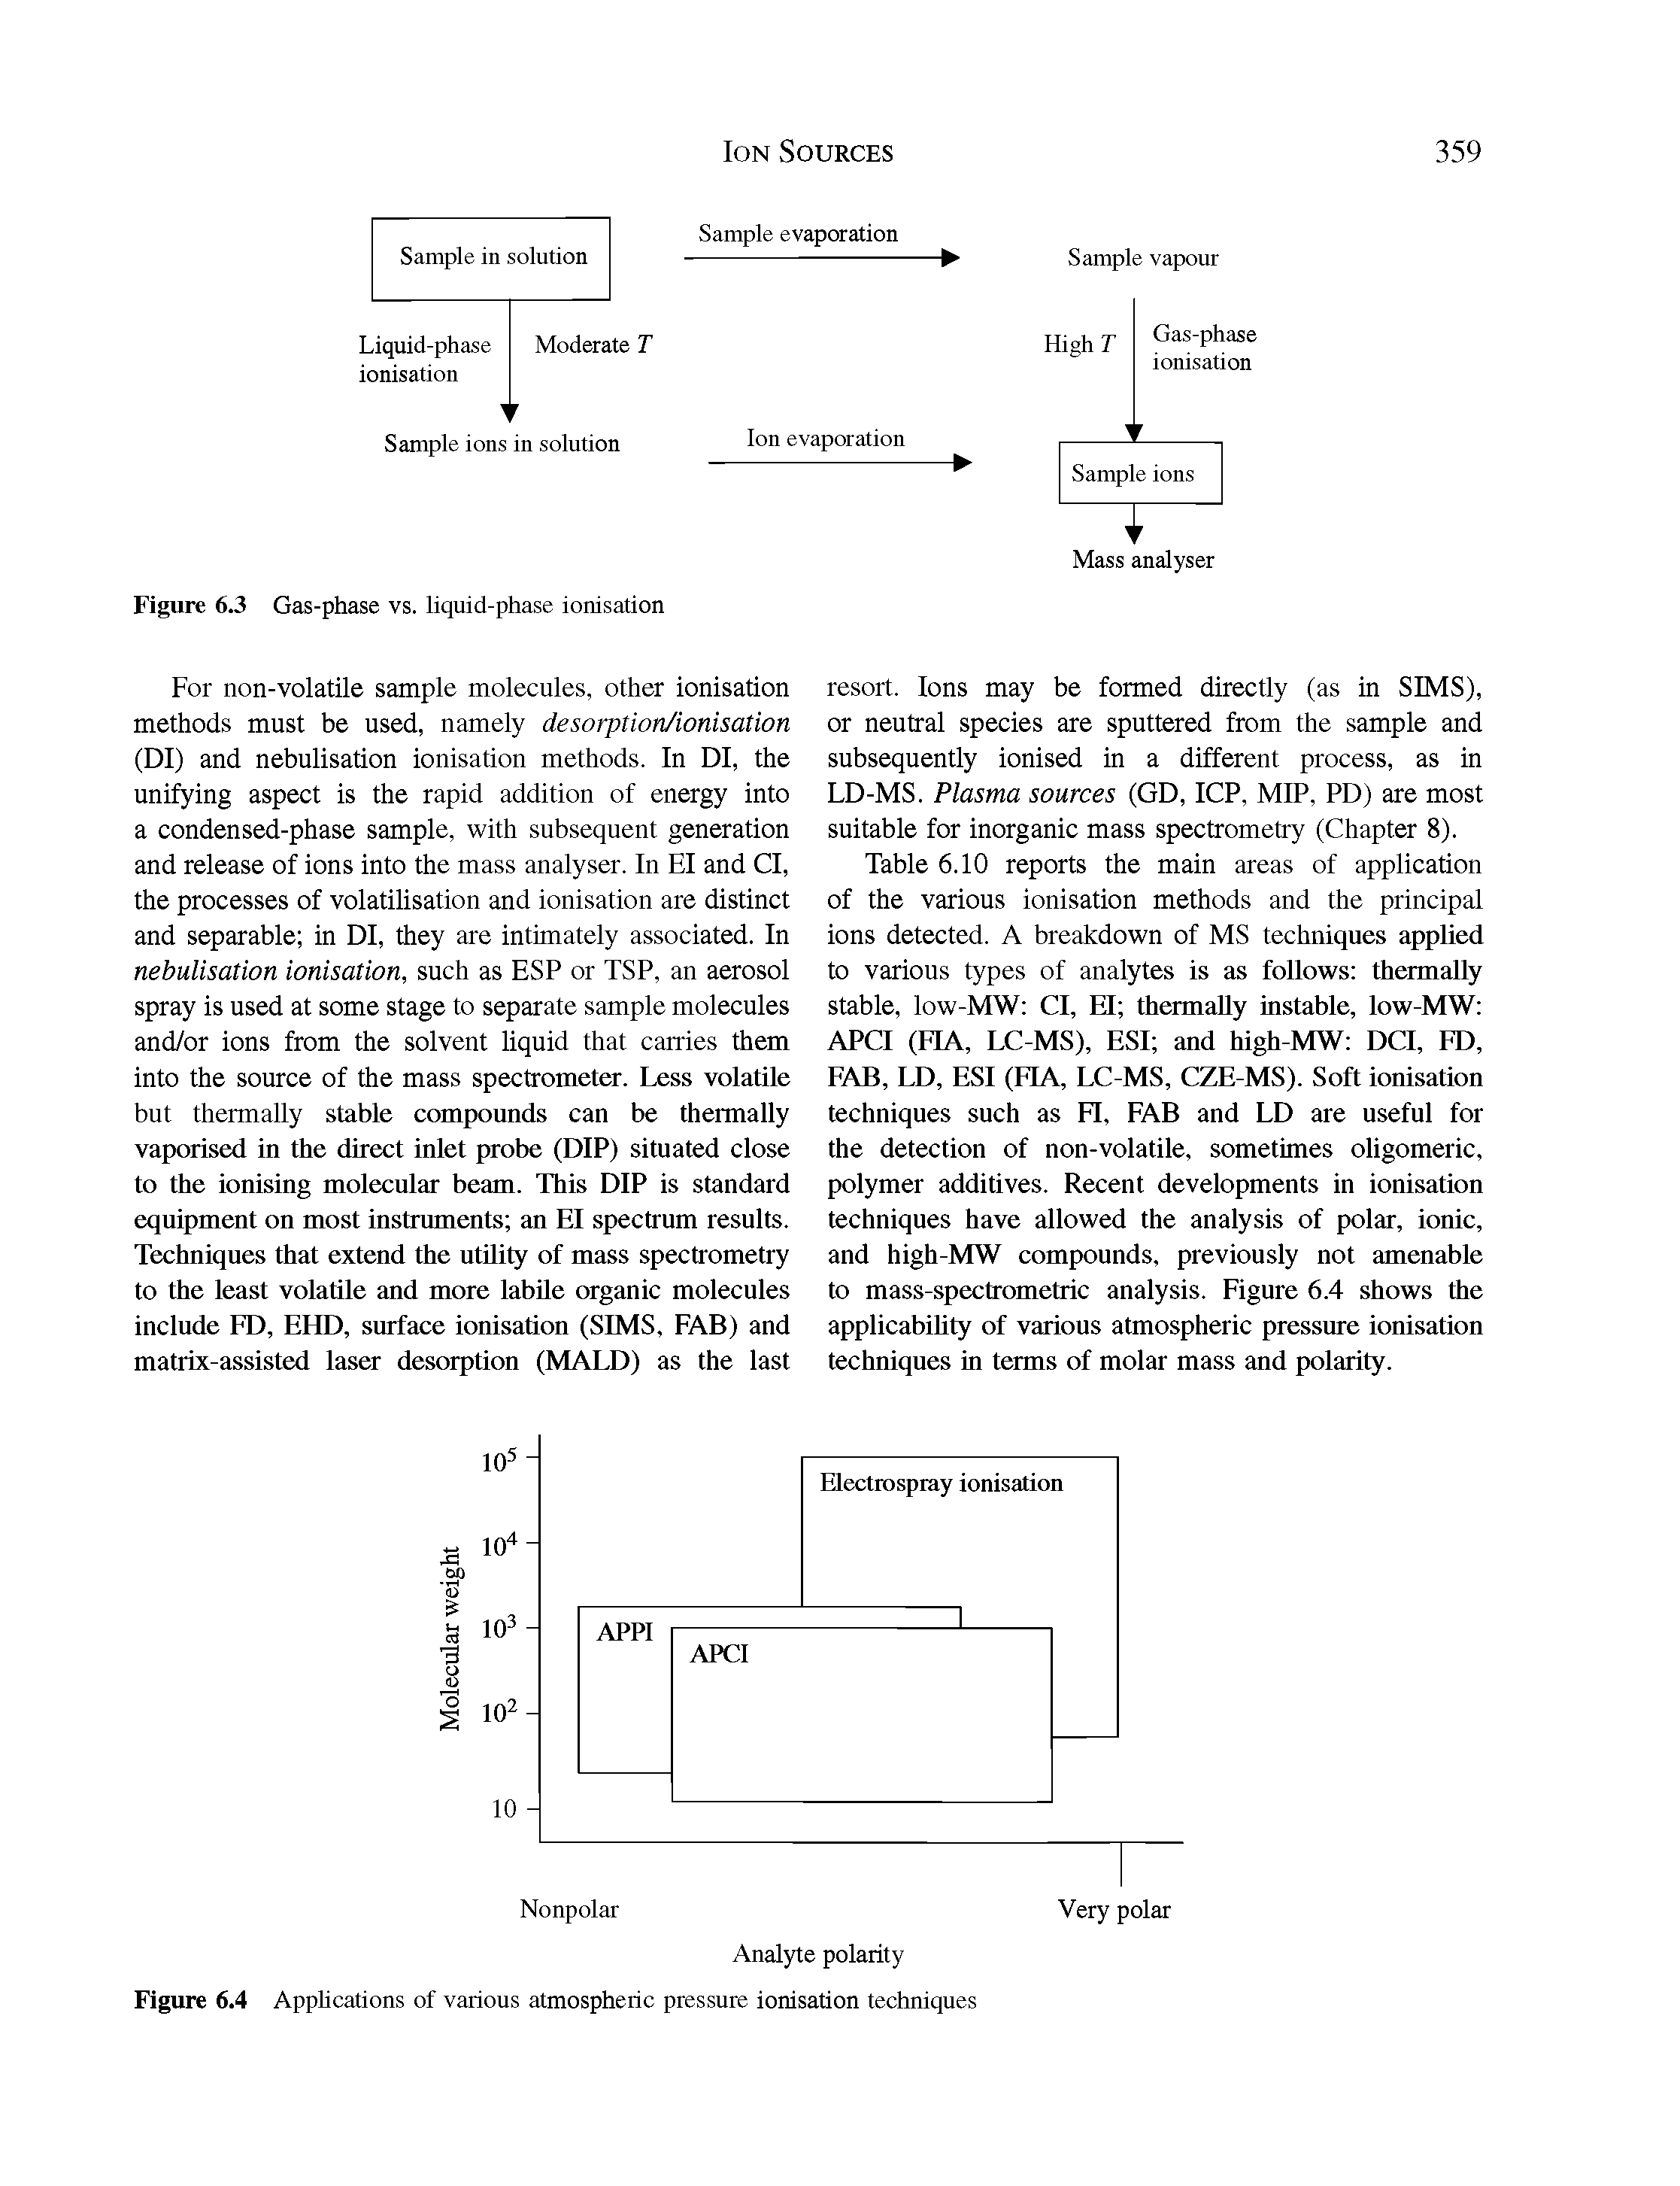 Figure 6.4 Applications of various atmospheric pressure ionisation techniques...